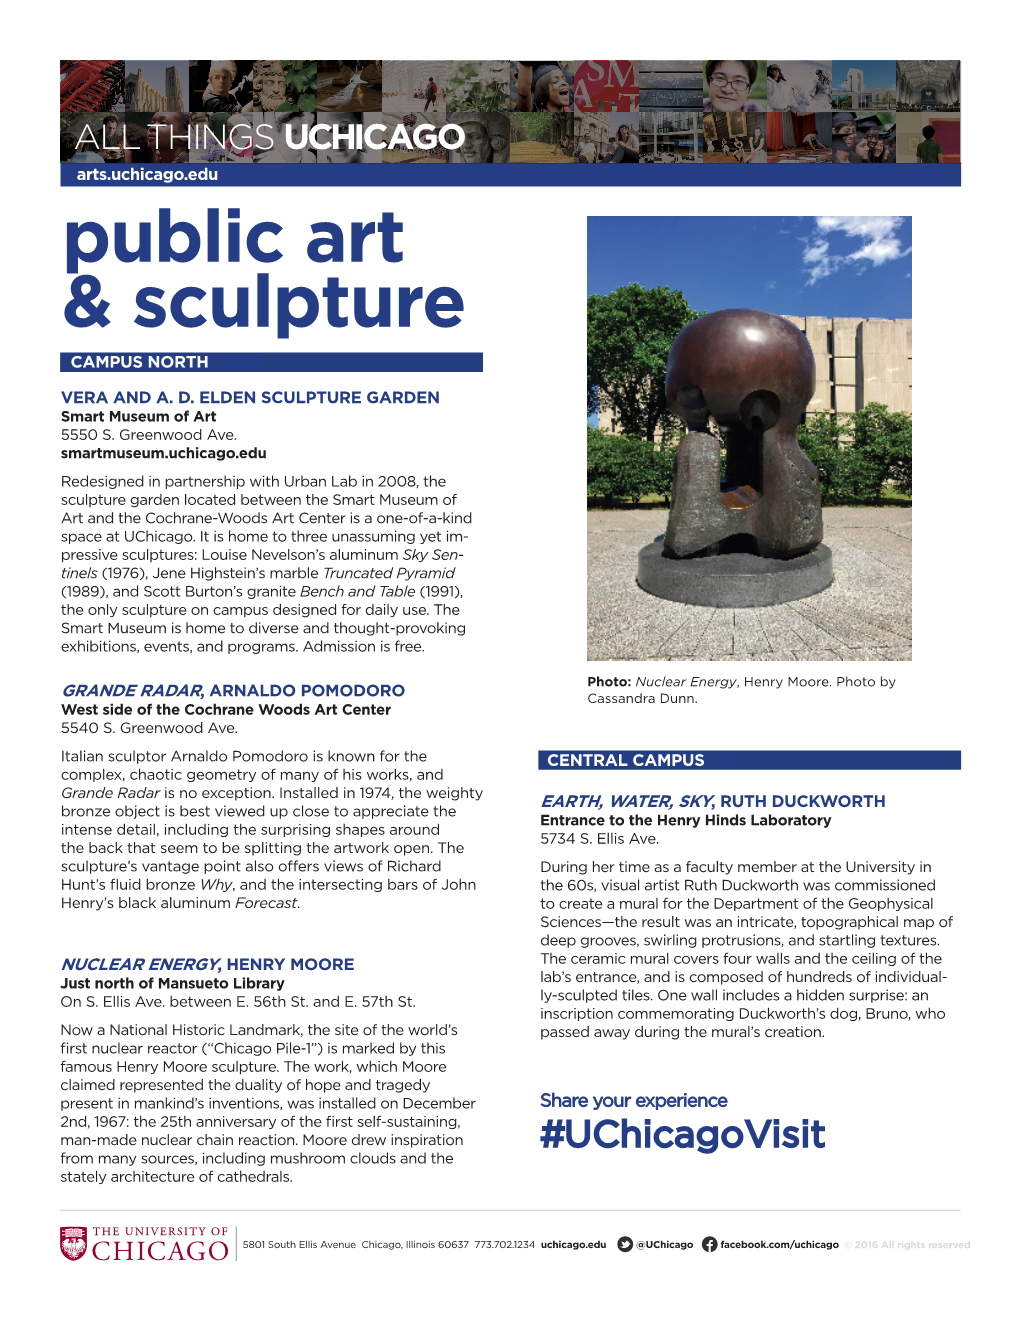 Public Art & Sculpture